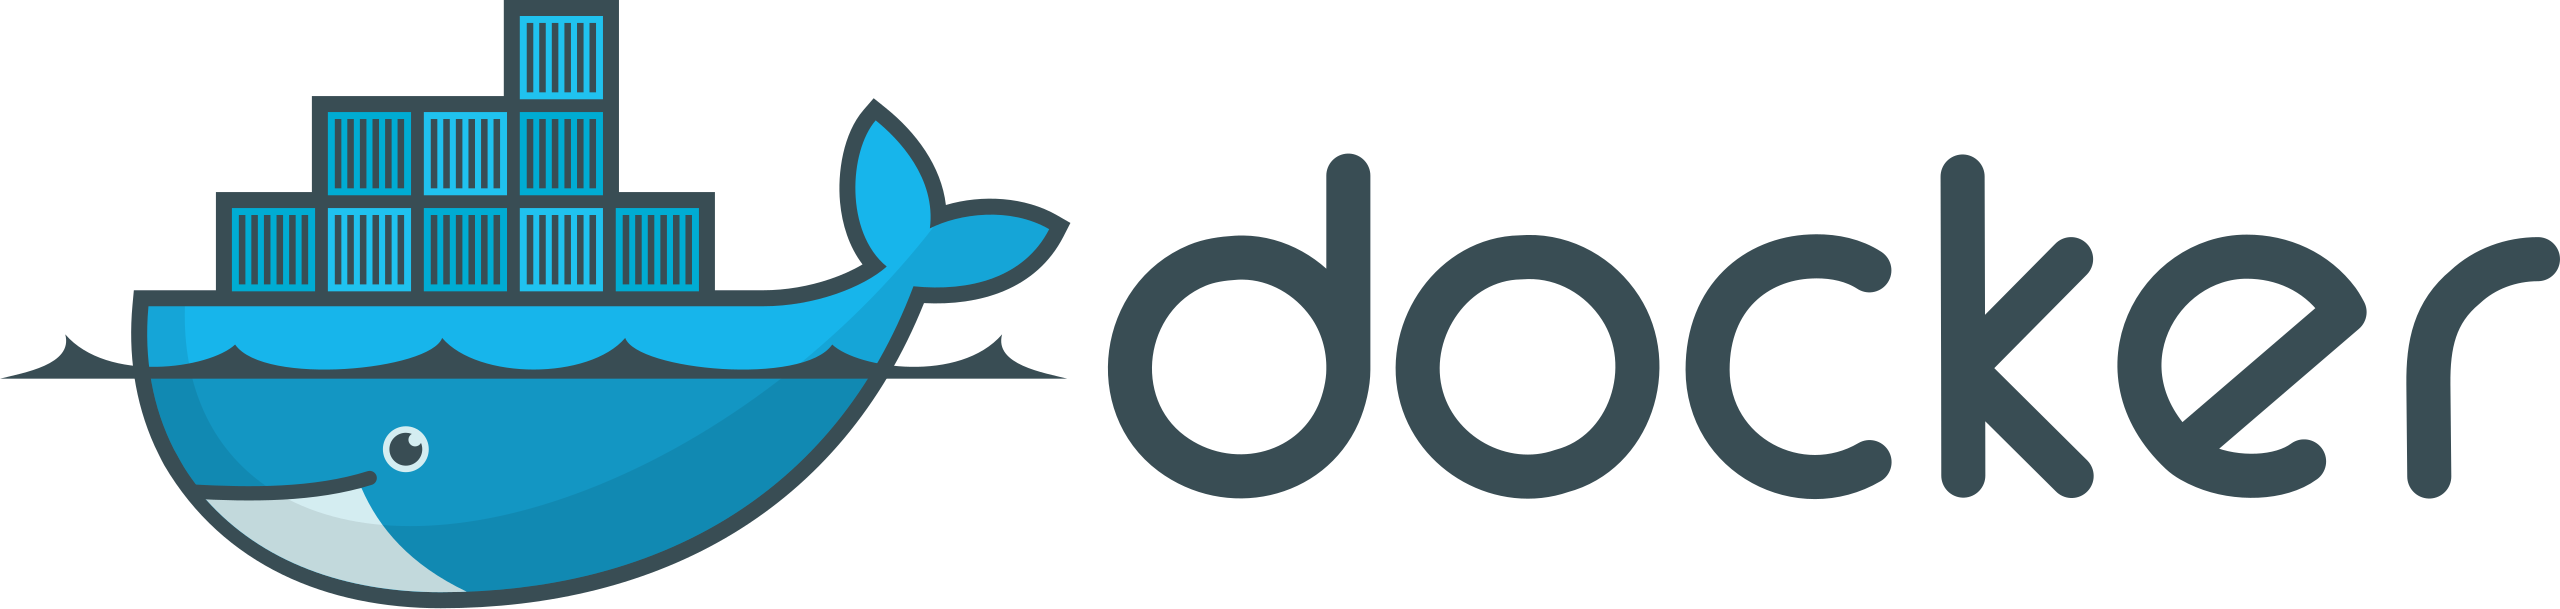 Docker containers or Docker logo.